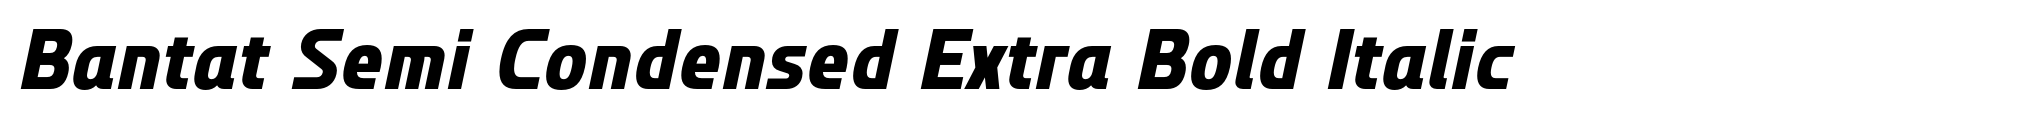 Bantat Semi Condensed Extra Bold Italic image